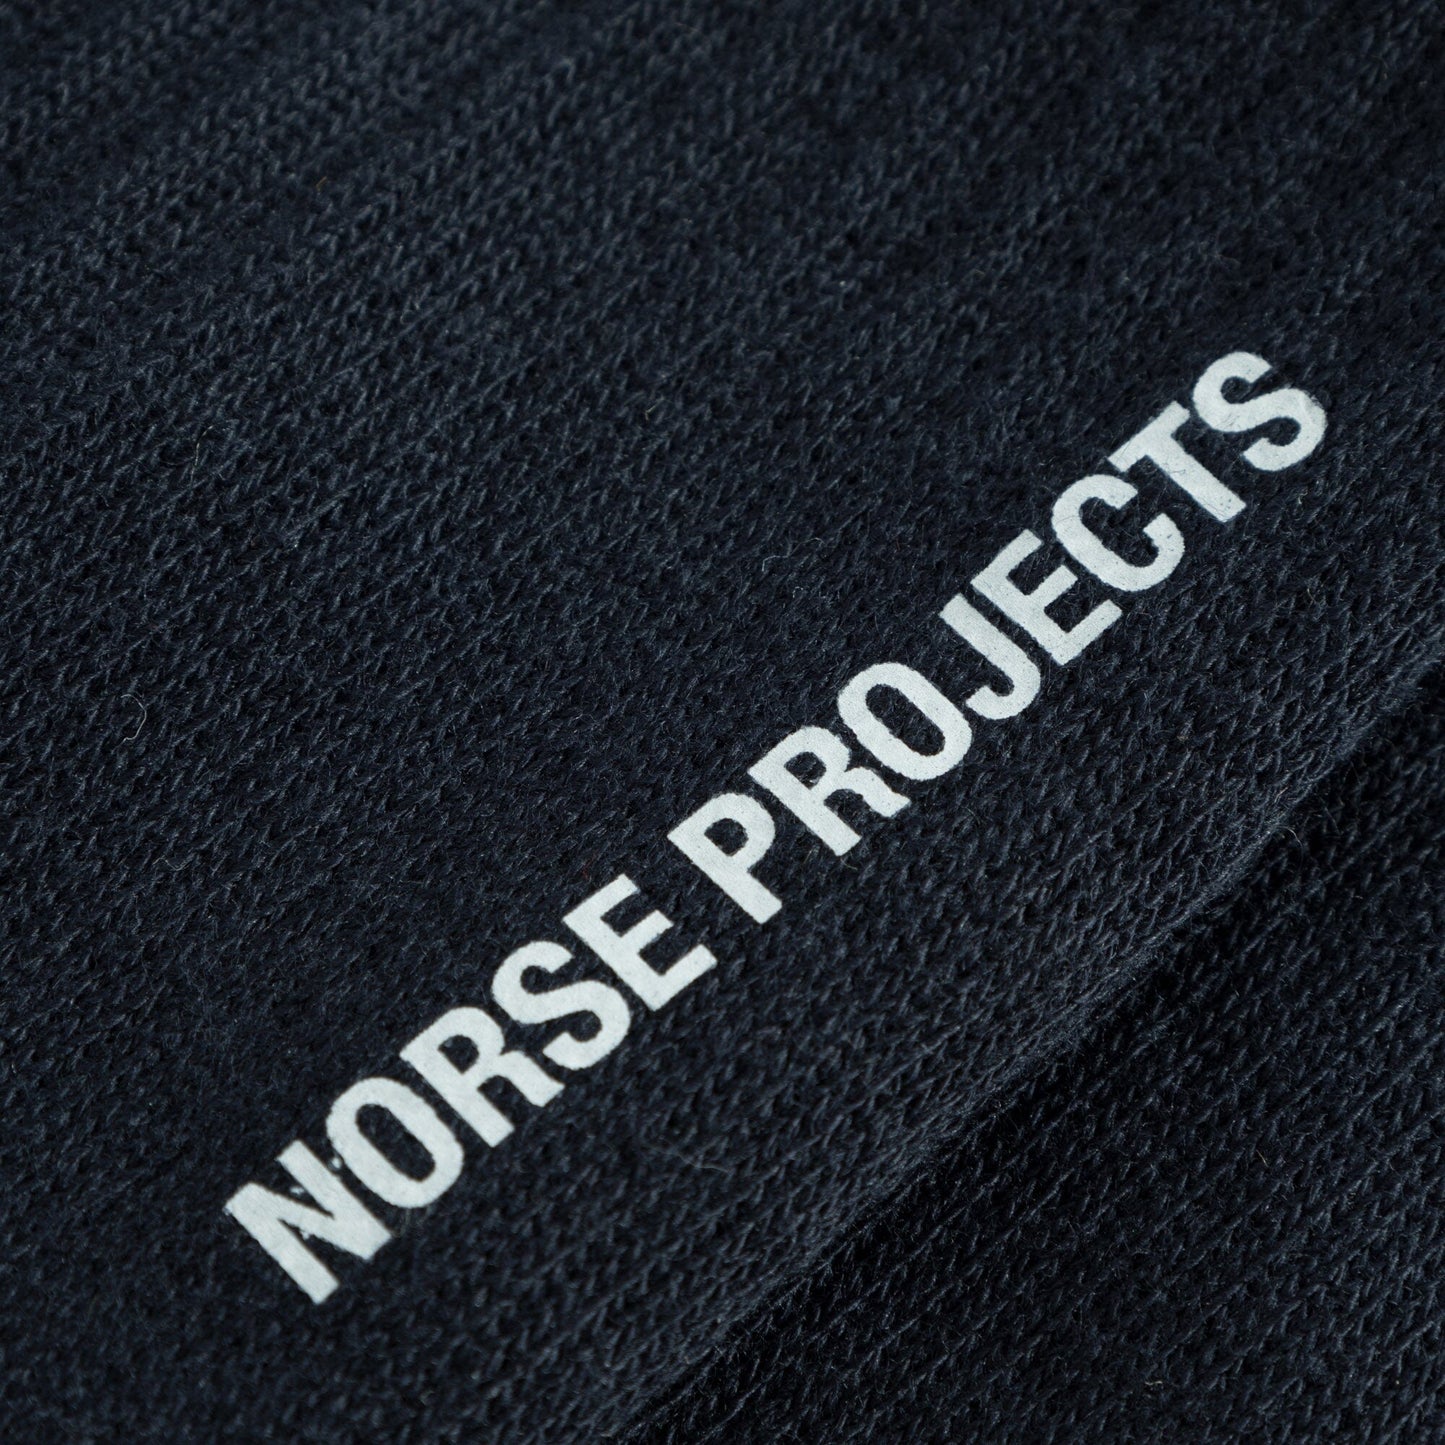 Norse Projects Bjarki Sport Sock - 2 Pack - Dark Navy Socks Norse Projects 